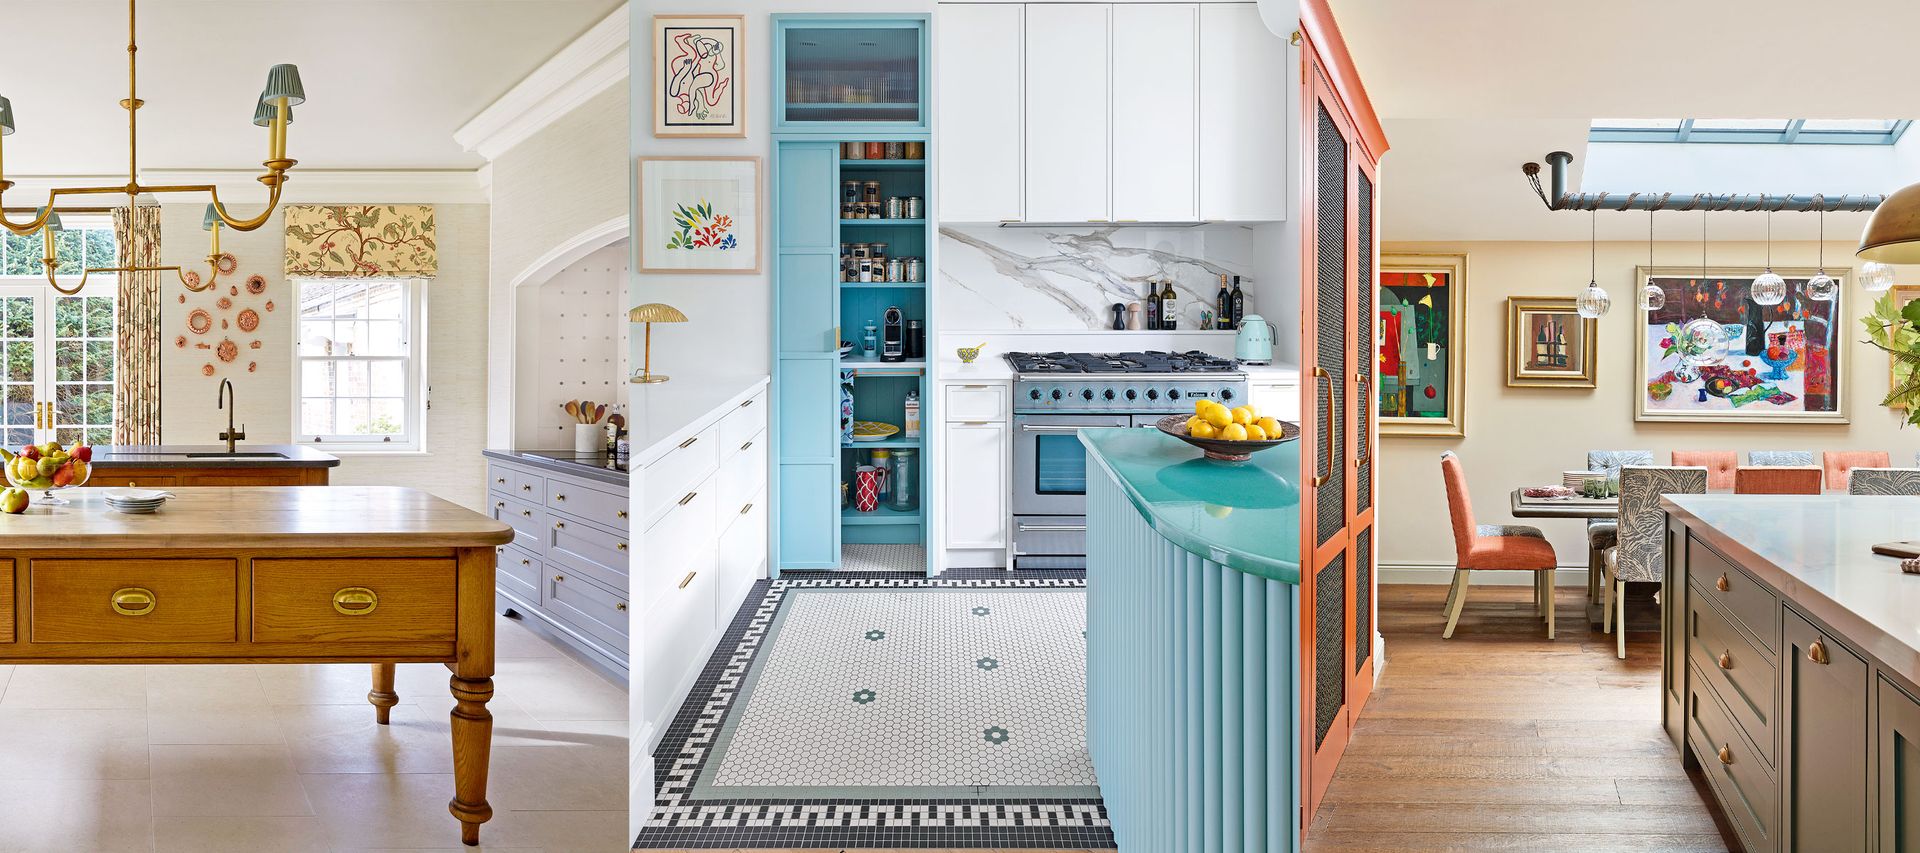 Decorative kitchen ideas: 15 ways to curate a dream kitchen